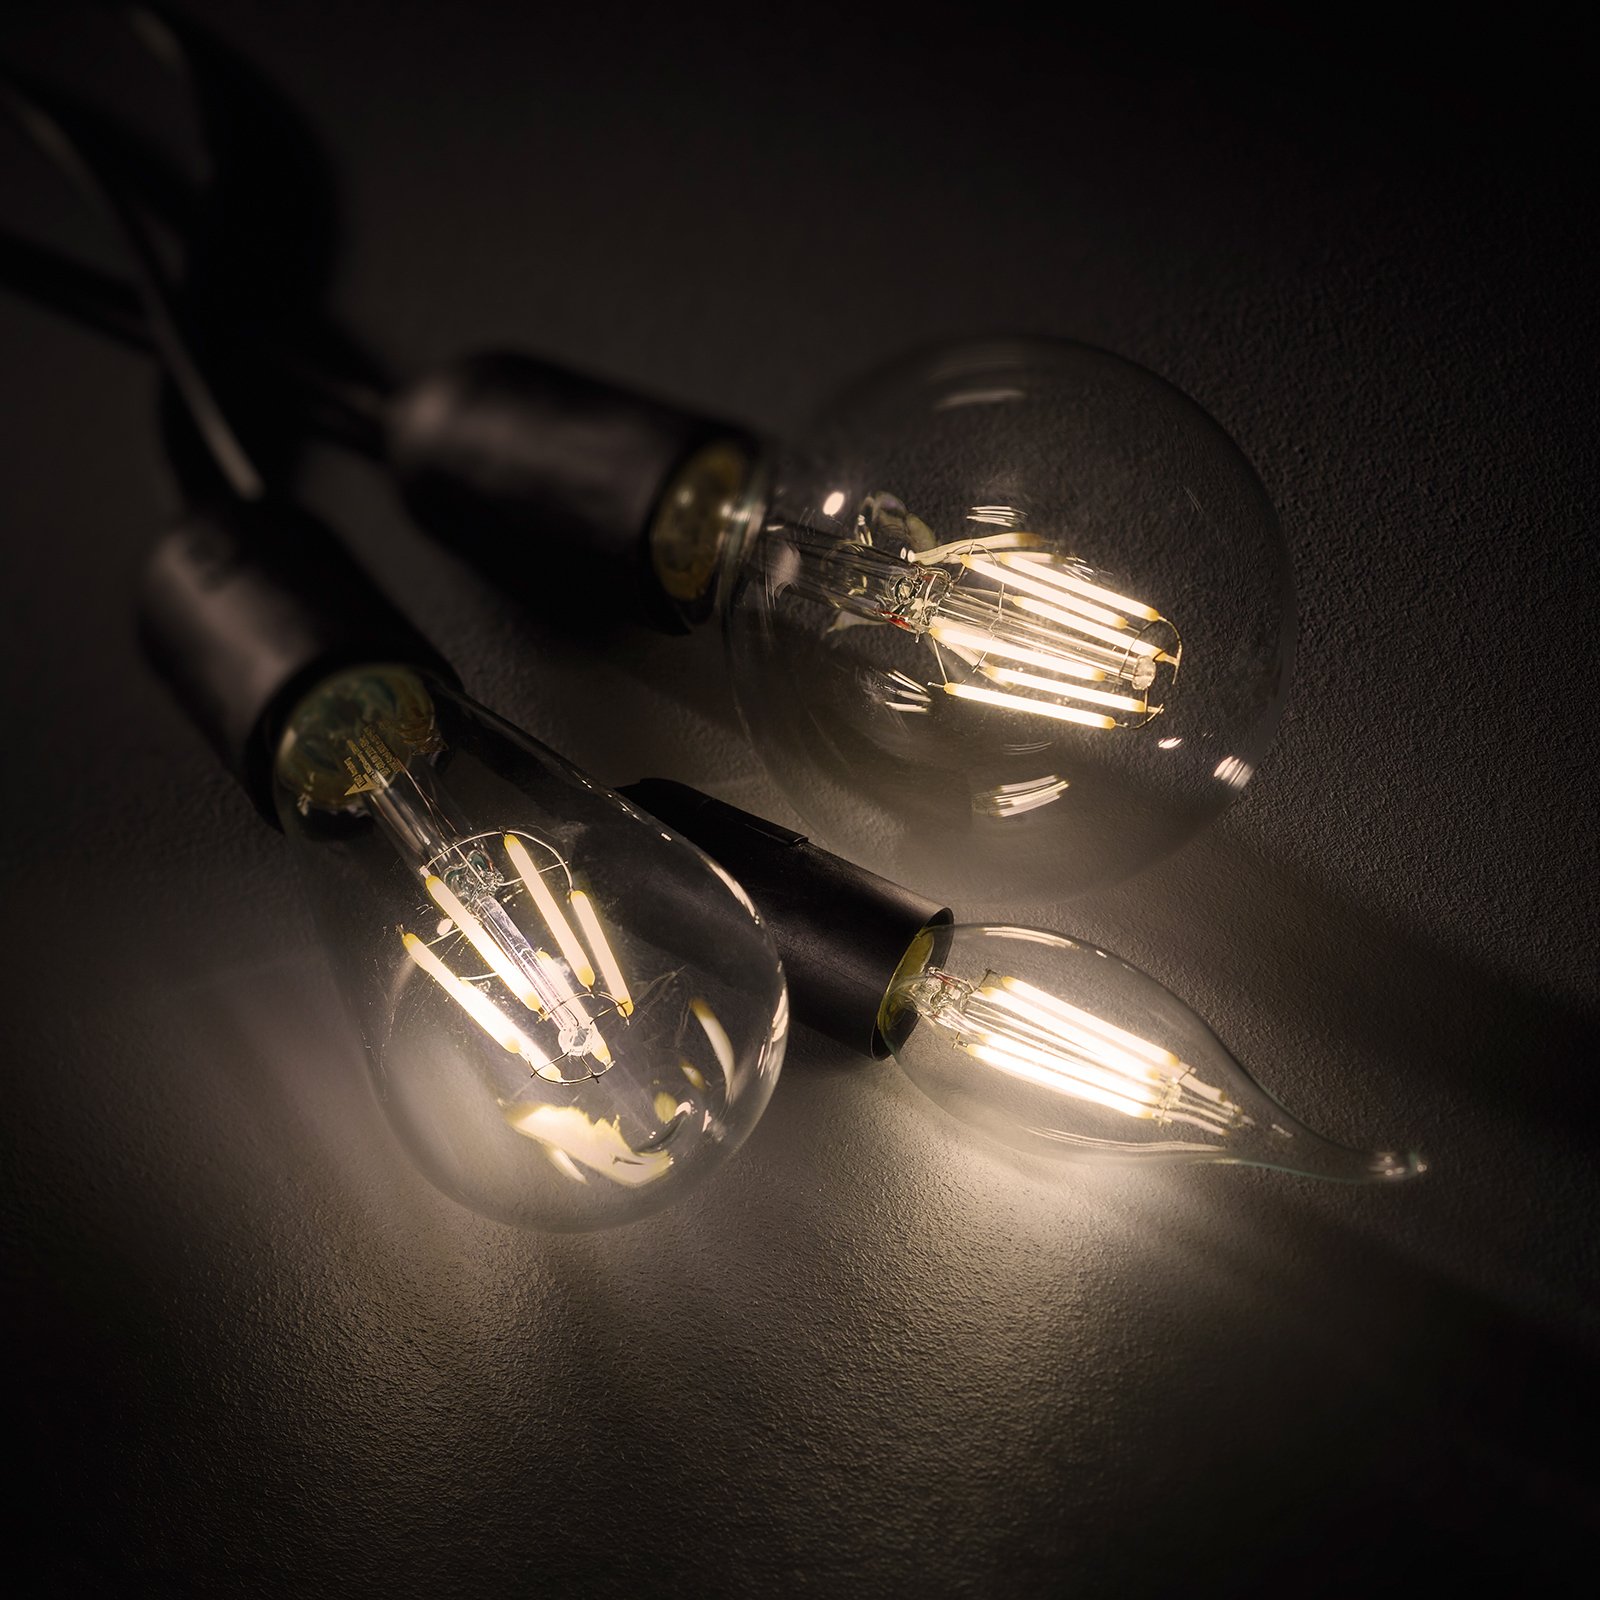 LED lamp E14 4W filament, 2.700K Switch Dimmer